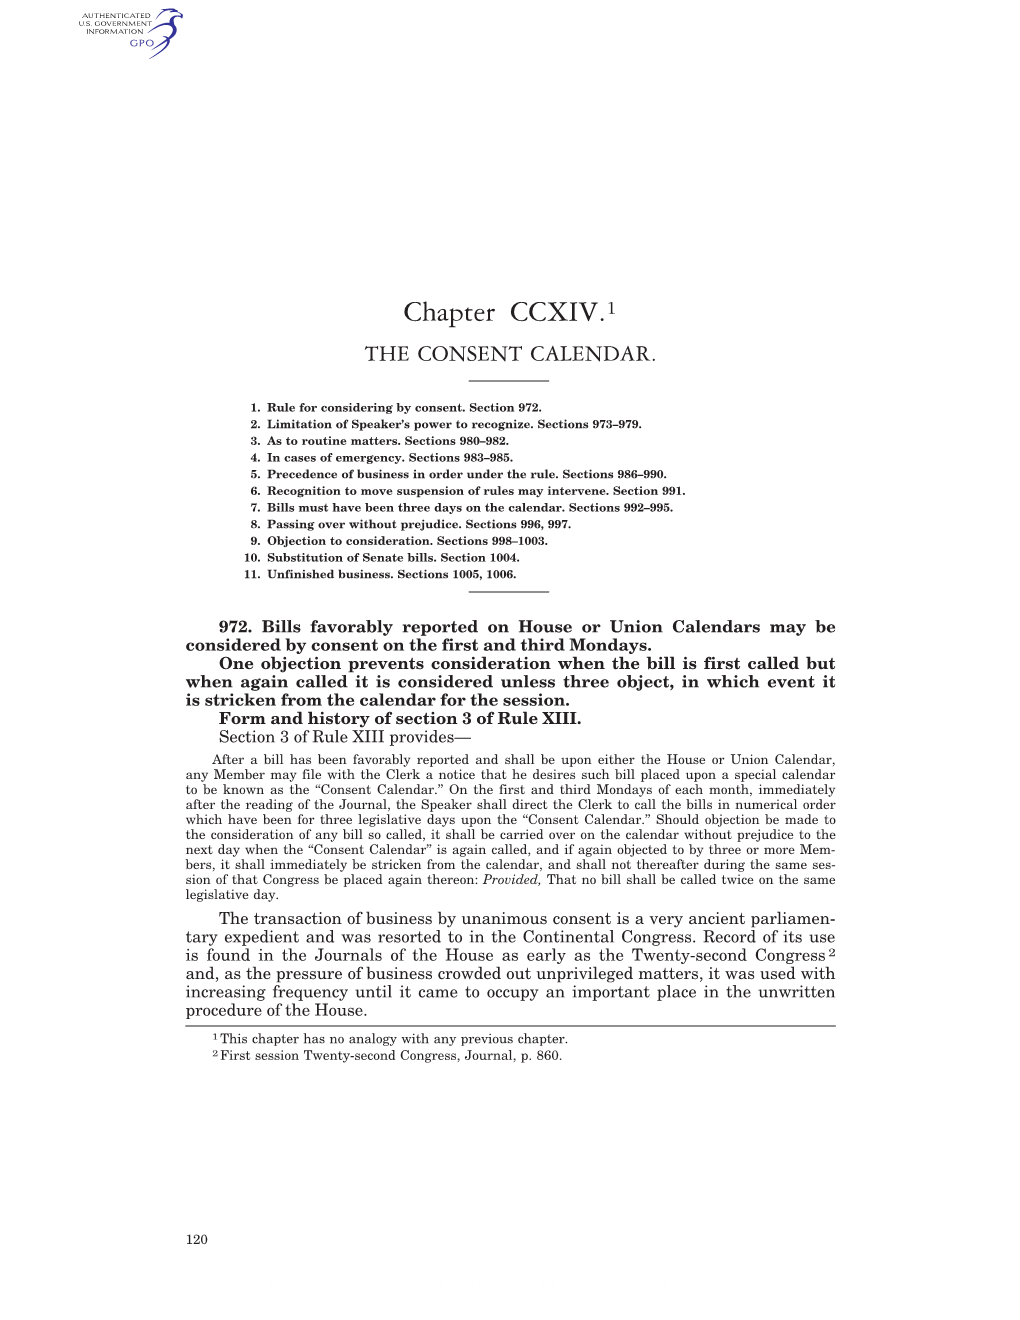 Chapter CCXIV.1 the CONSENT CALENDAR